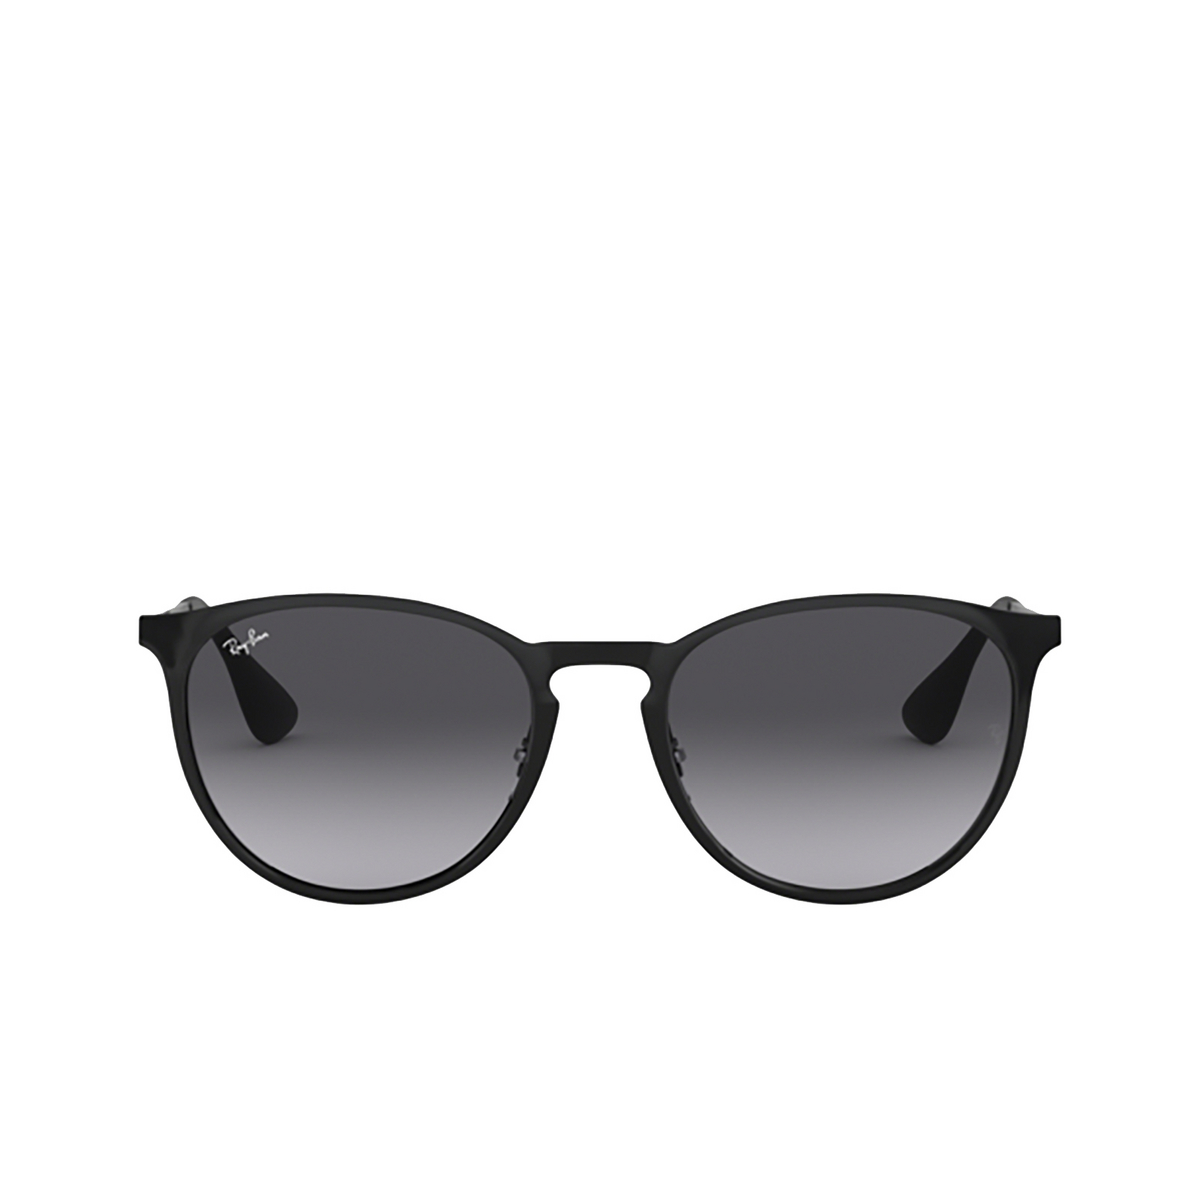 Ray-Ban ERIKA METAL Sunglasses 002/8G BLACK - front view